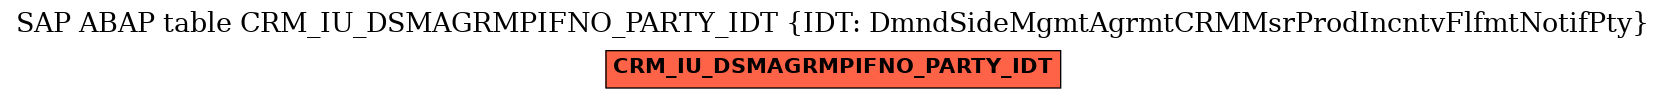 E-R Diagram for table CRM_IU_DSMAGRMPIFNO_PARTY_IDT (IDT: DmndSideMgmtAgrmtCRMMsrProdIncntvFlfmtNotifPty)